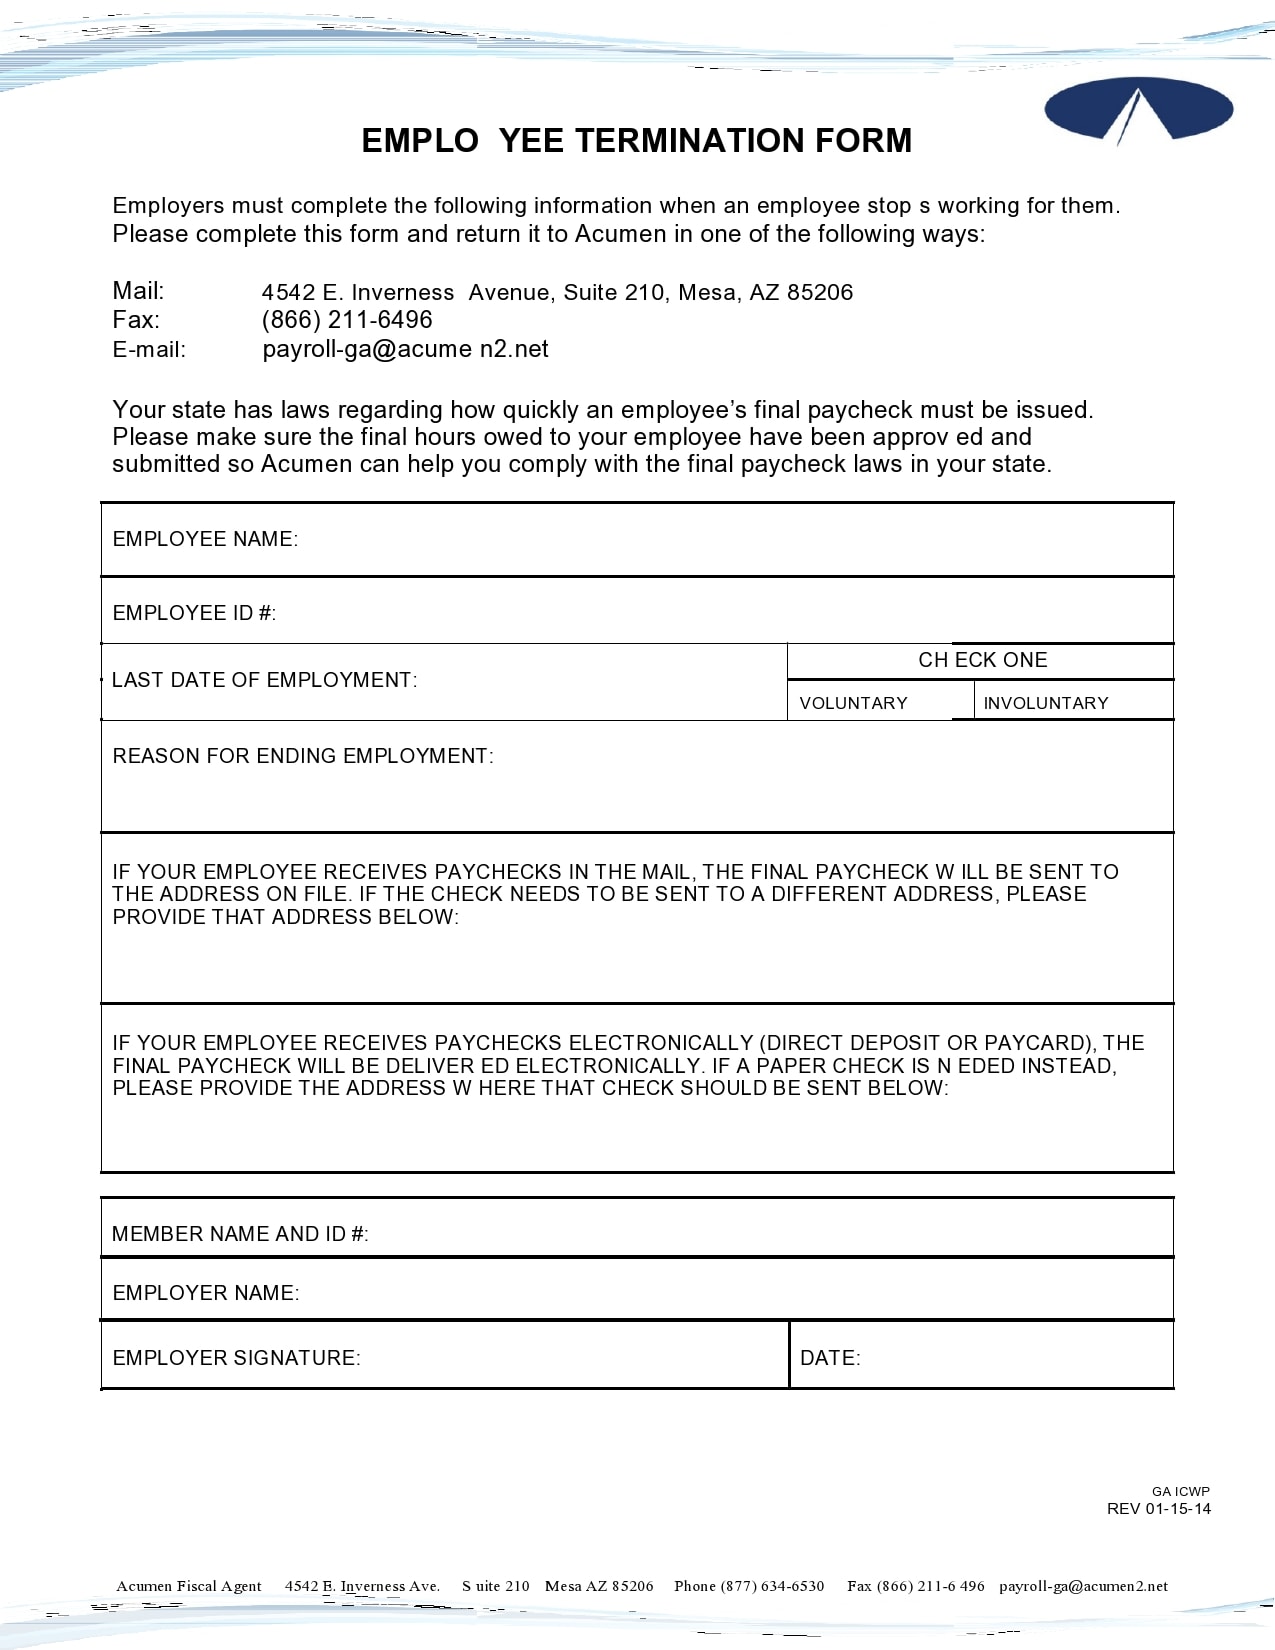 Sample Employee Termination Form